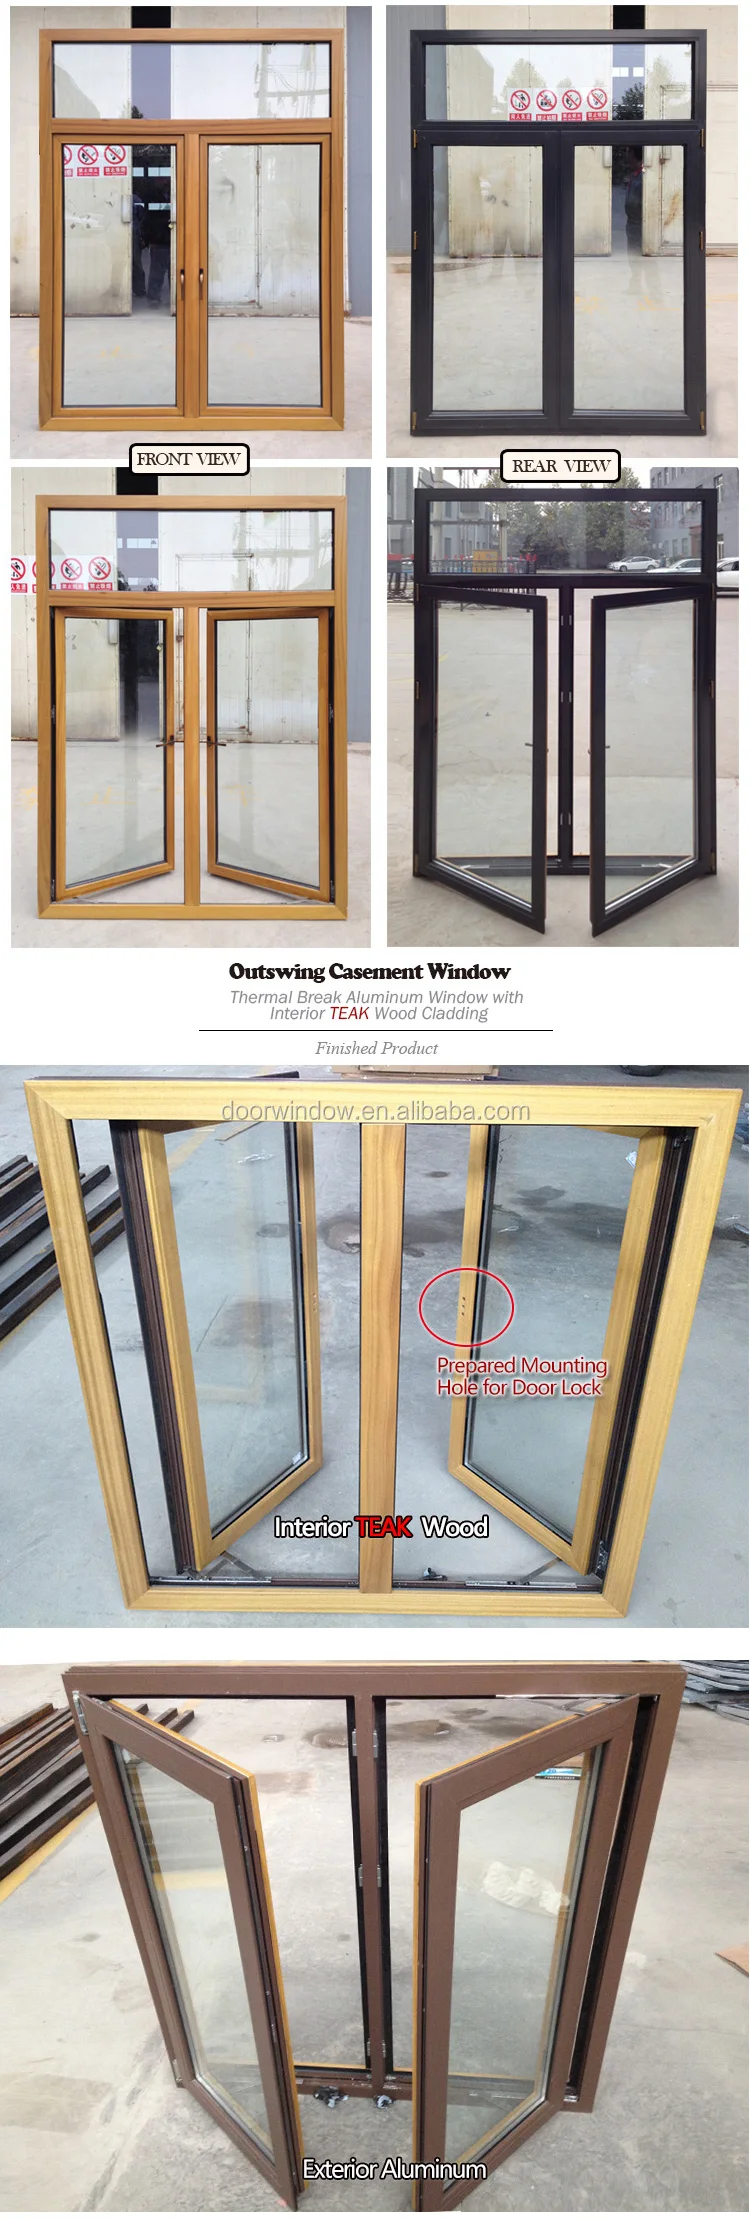 Teak Wood French Casement Wooden window frames designs casement window for home